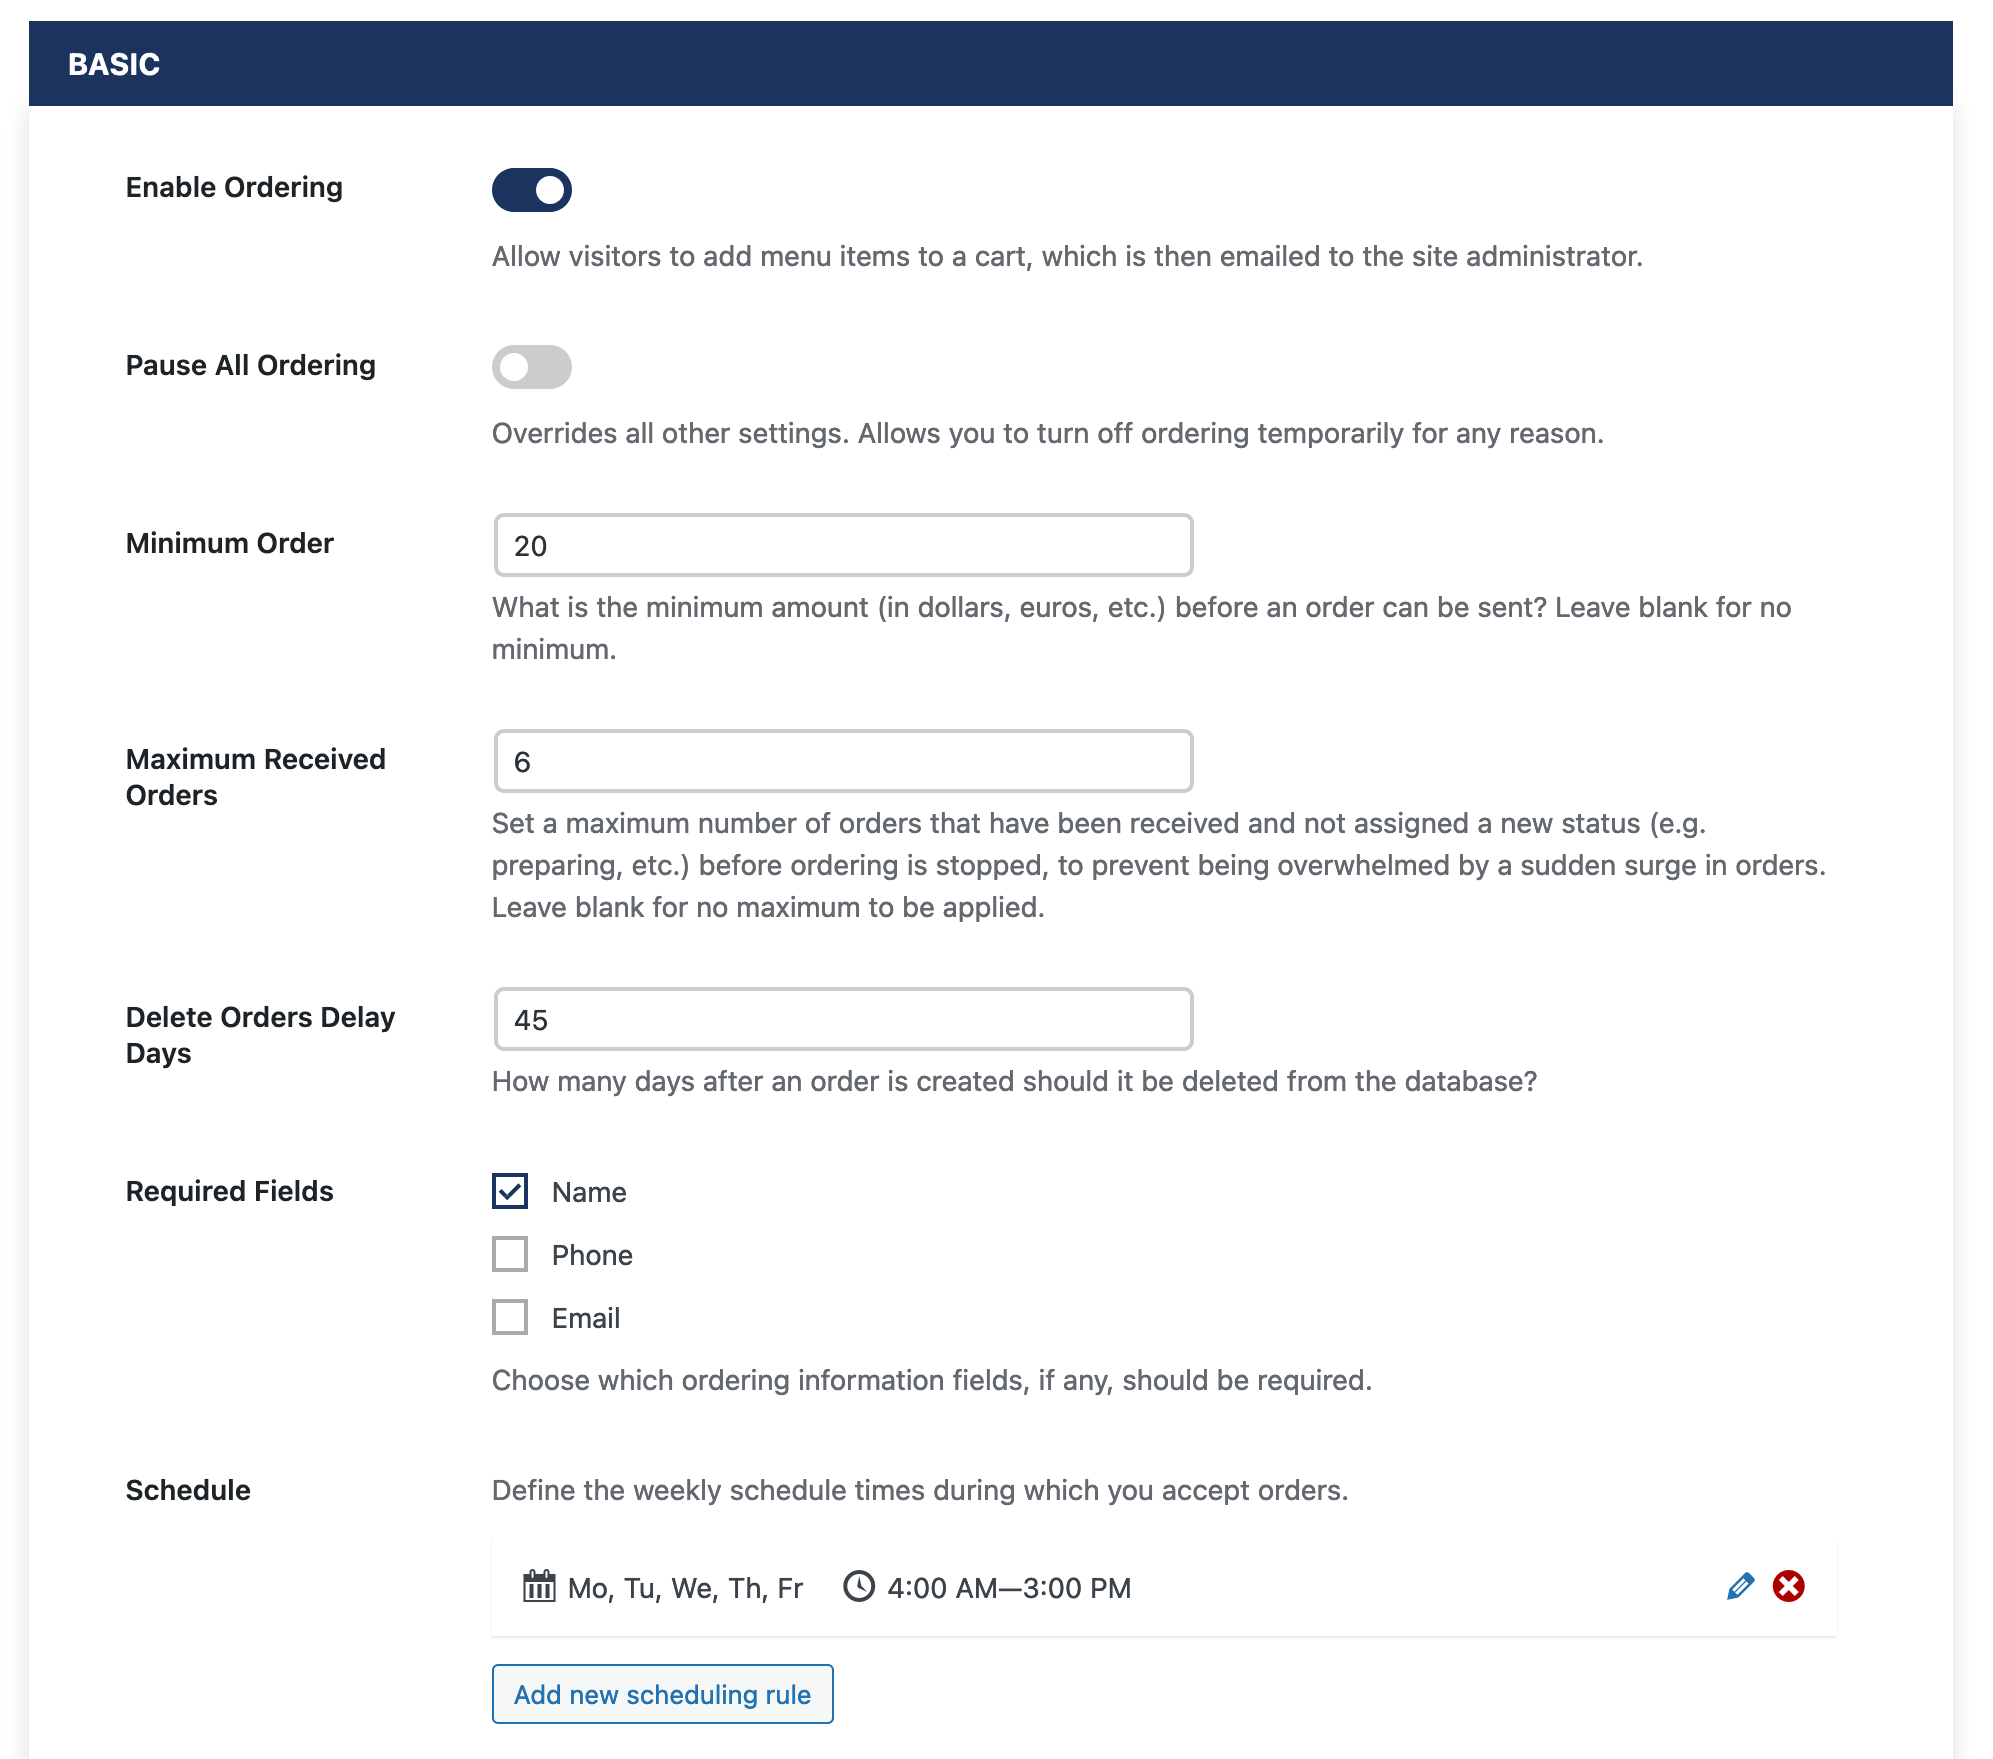 Screenshot of the basic ordering settings